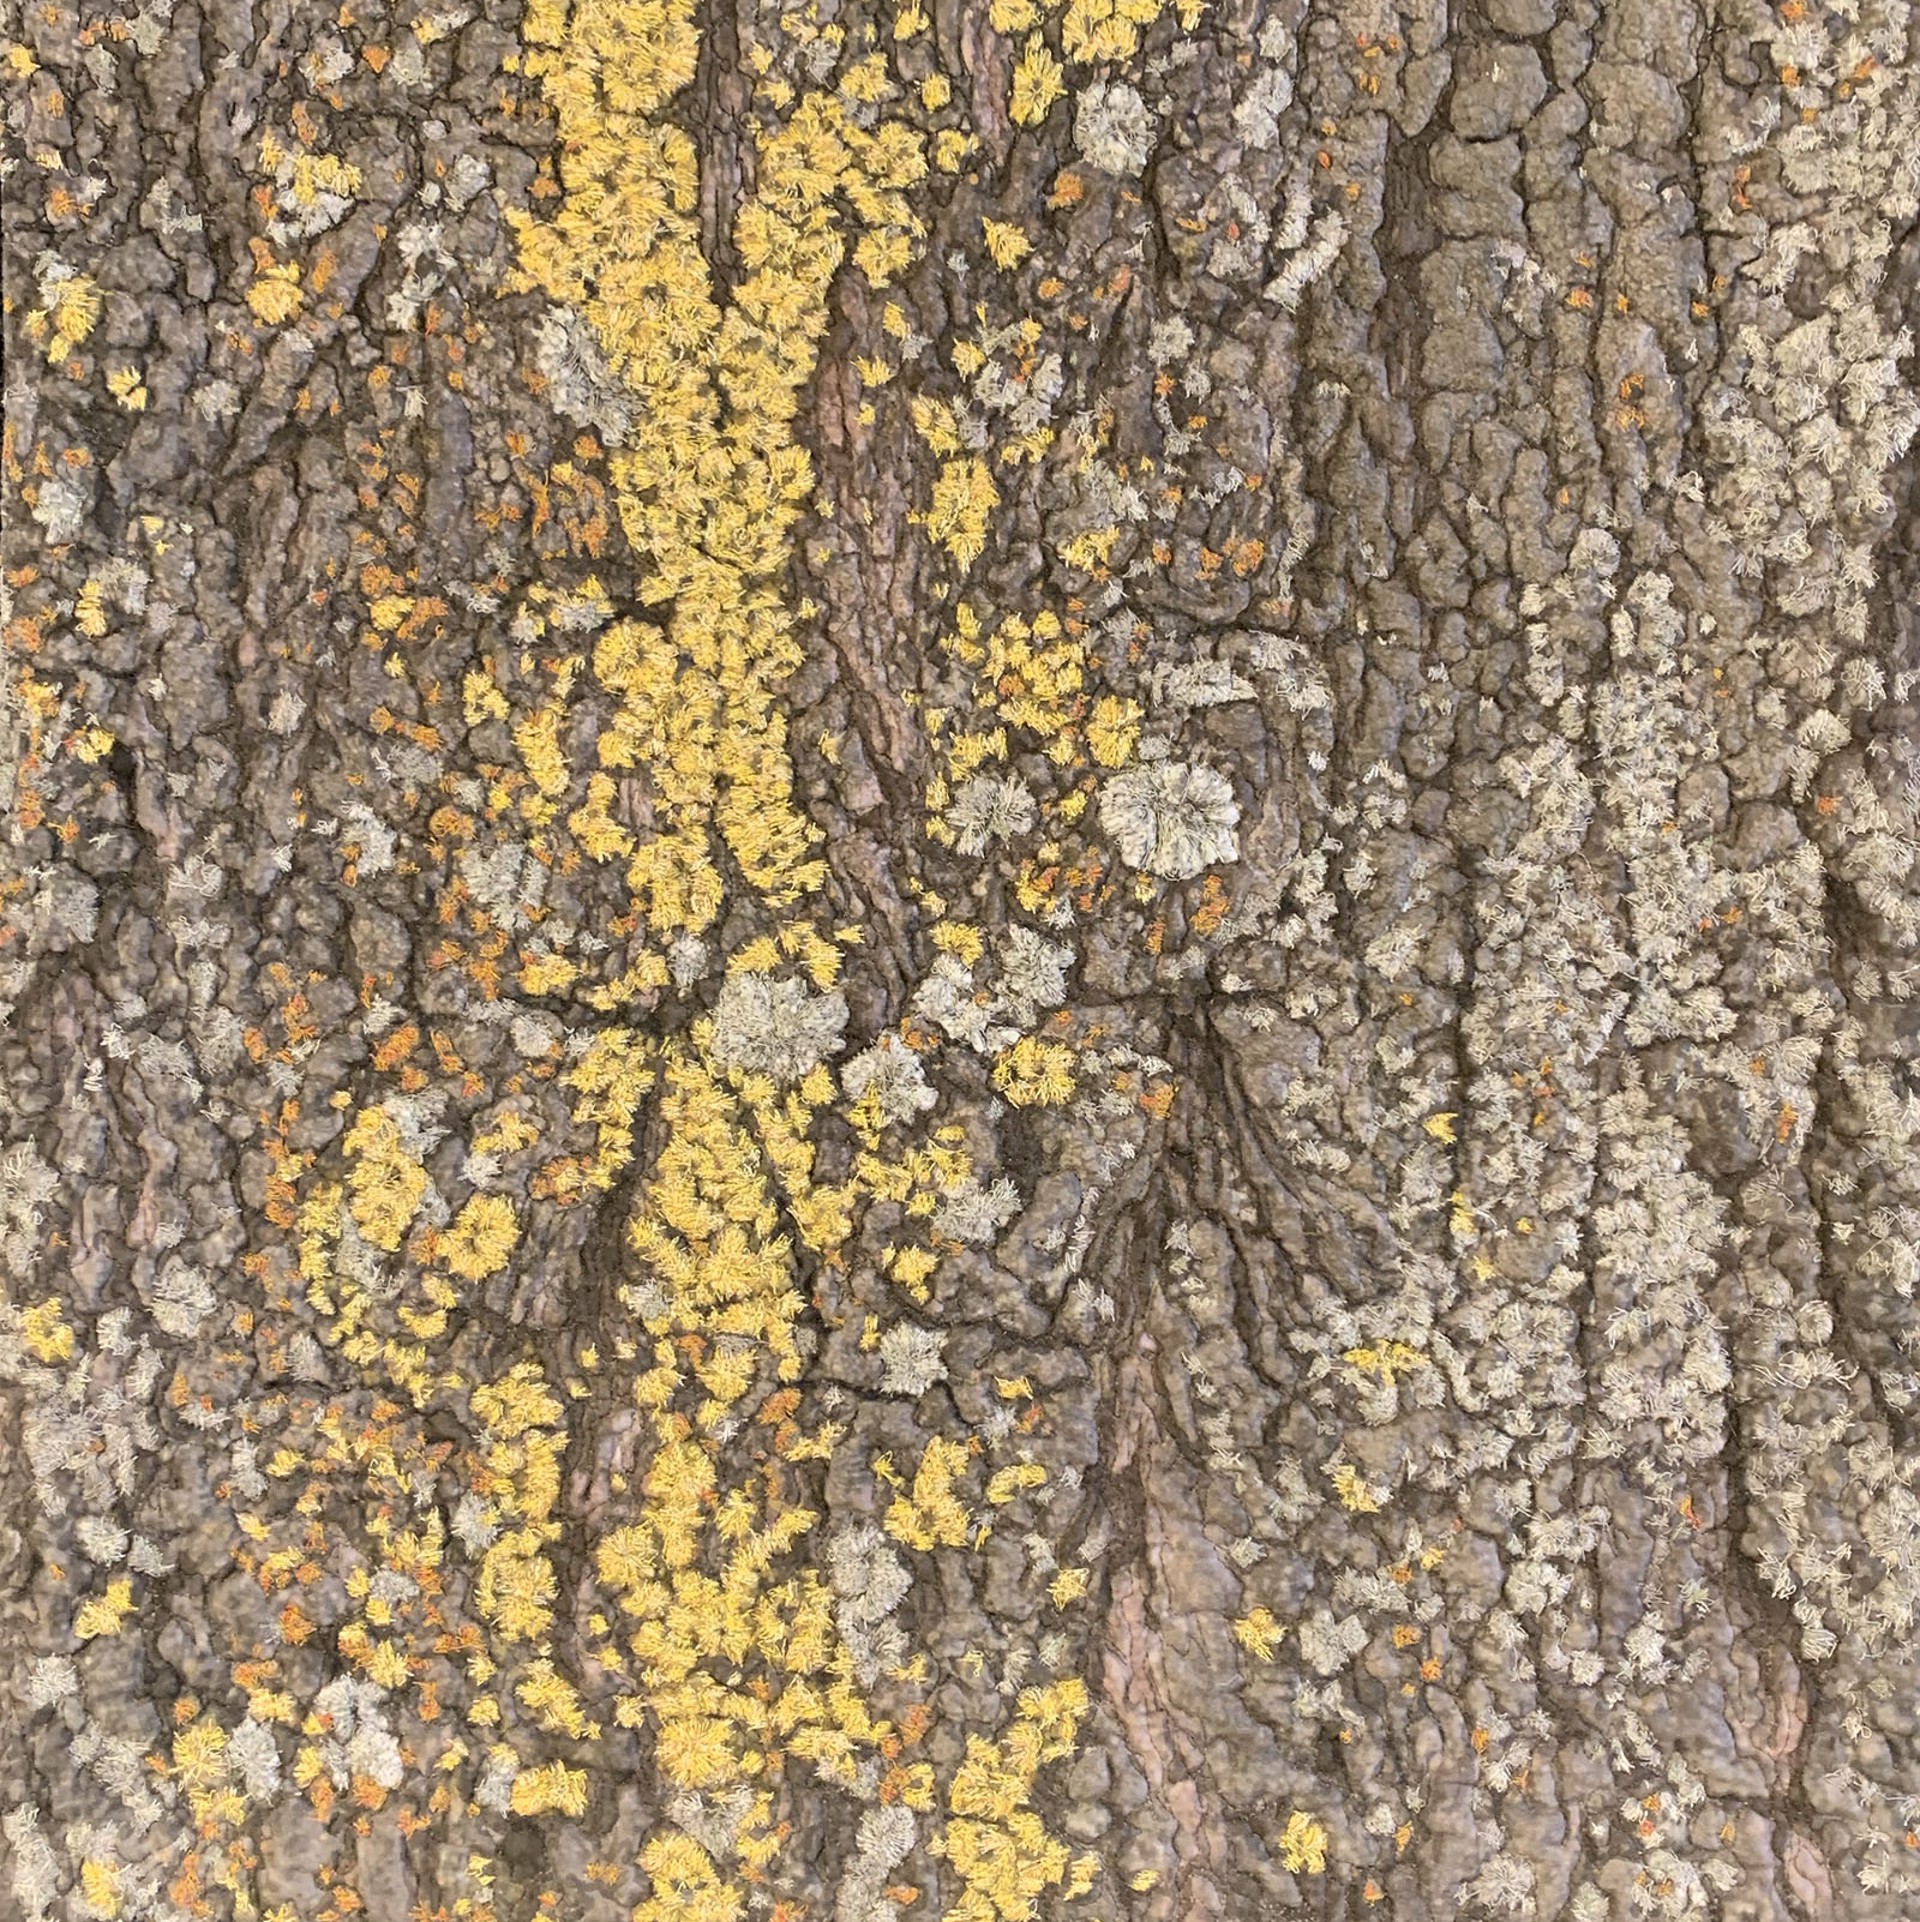 Untitled (lichen on bark) by Martha Cole -